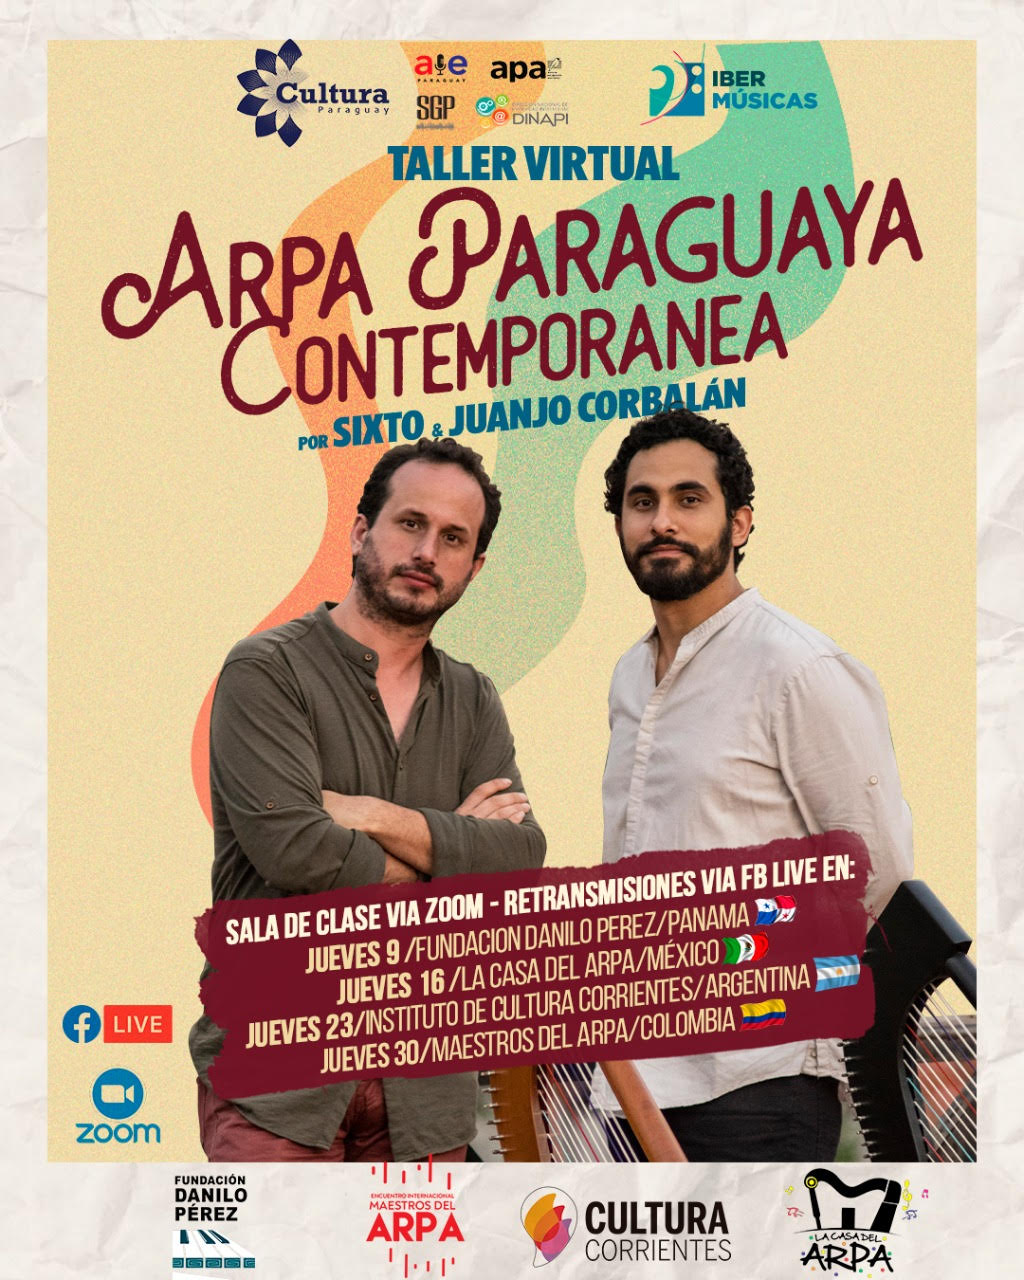 Arpistas paraguayos inician taller virtual de Arpa Paraguaya Contemporánea imagen